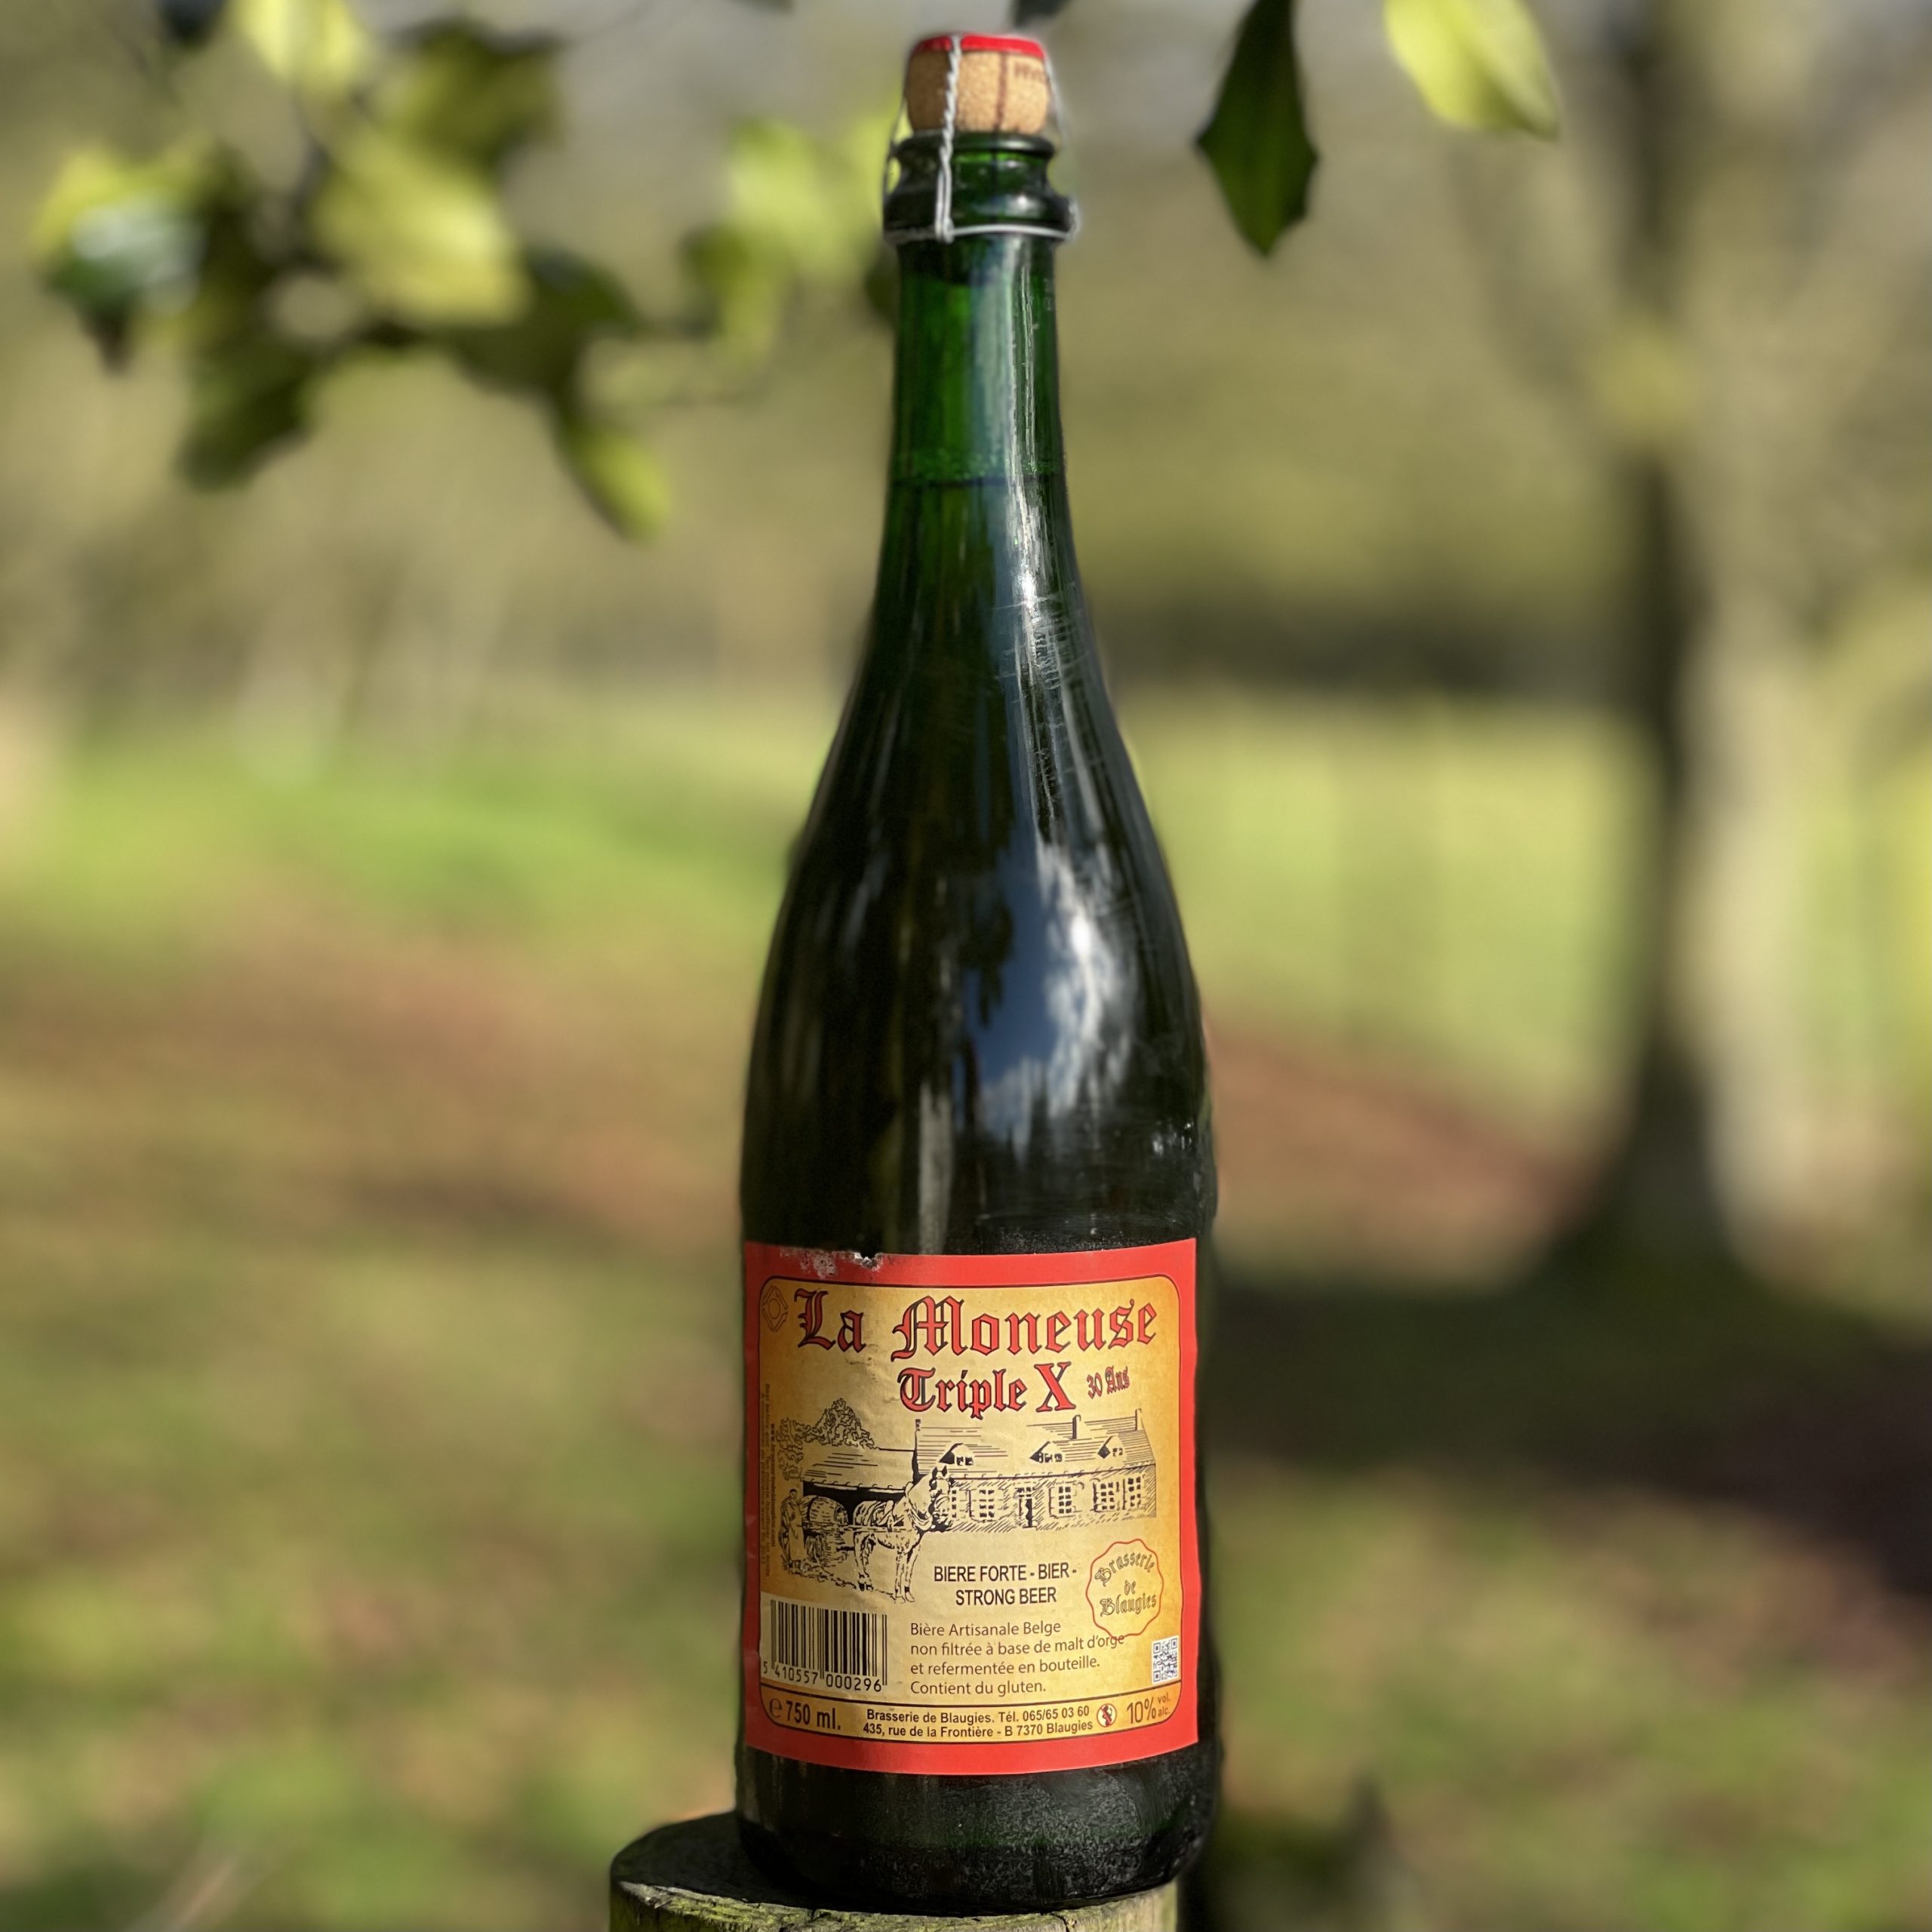 The Bottle of La Bleiwies